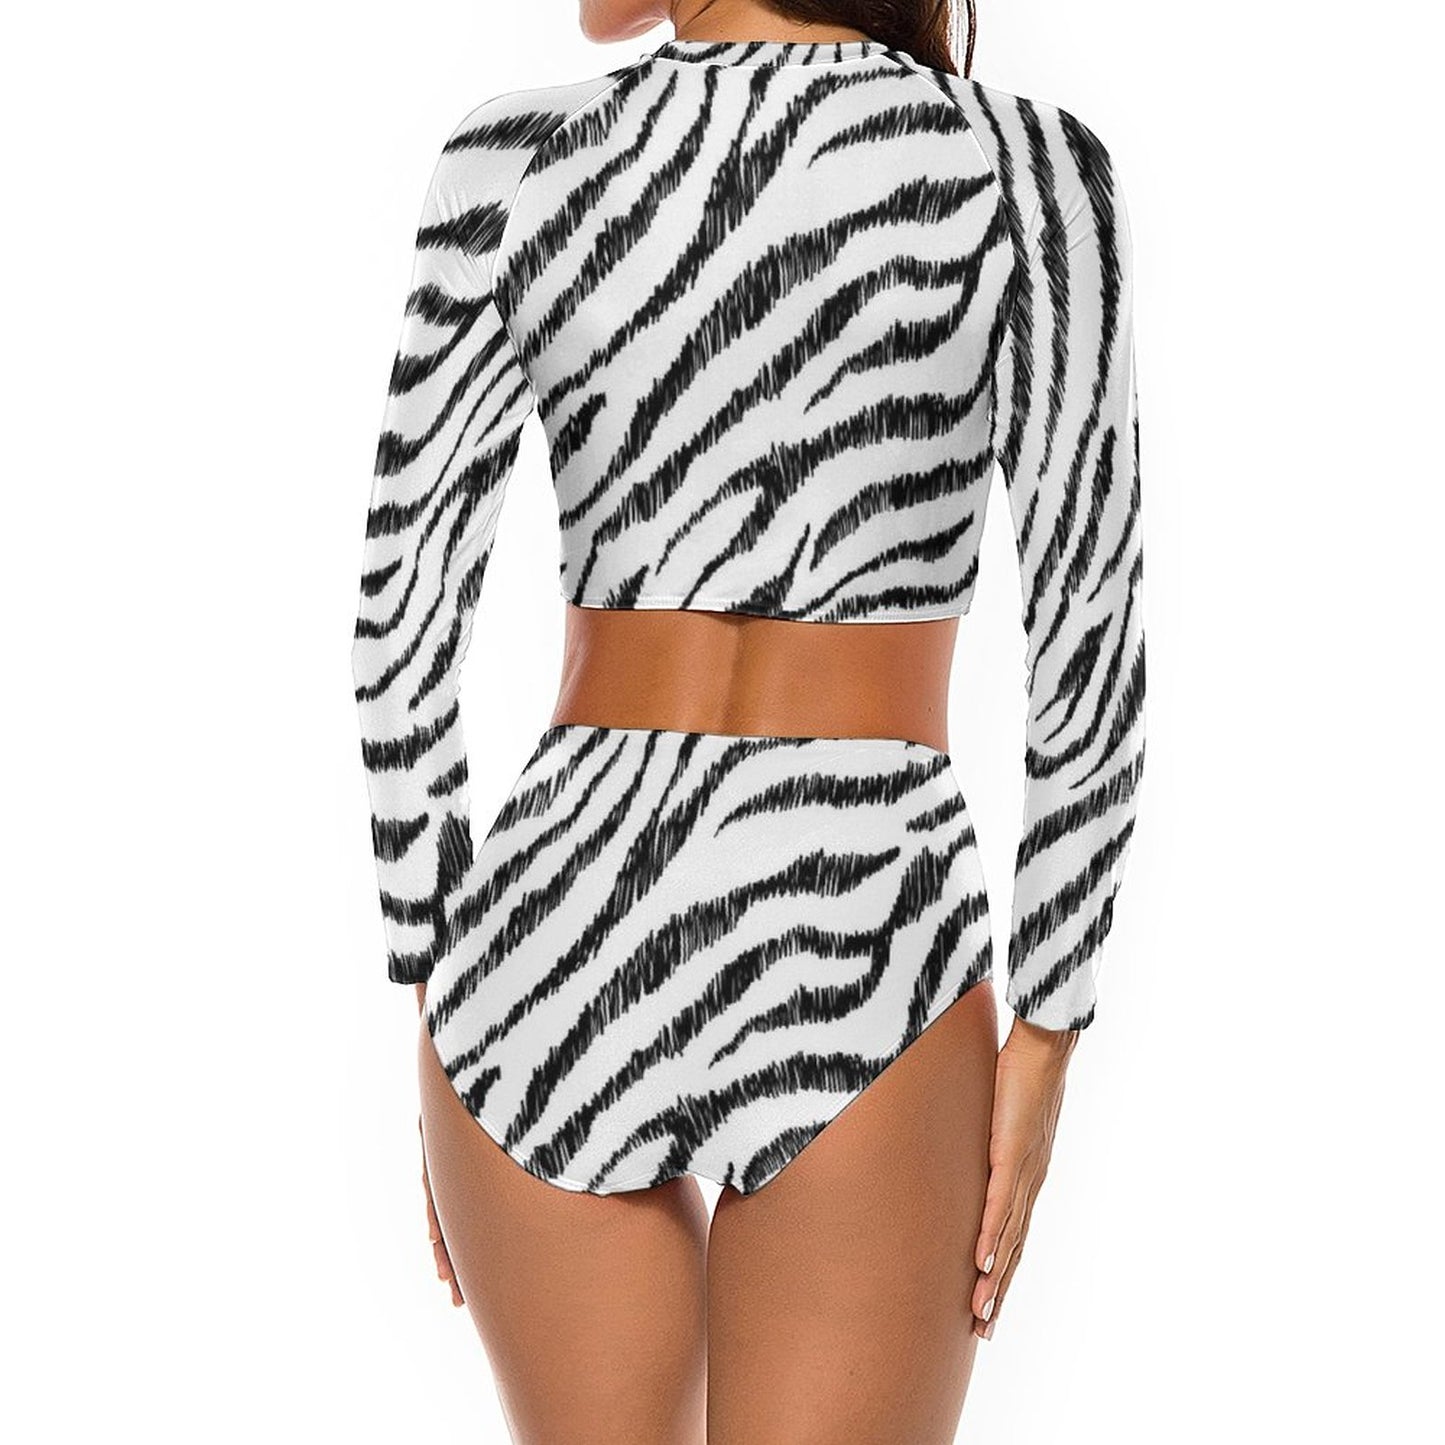 Online DIY Swimwear for Women Swimsuit Animal Prints Diagonal Zebra Stripes